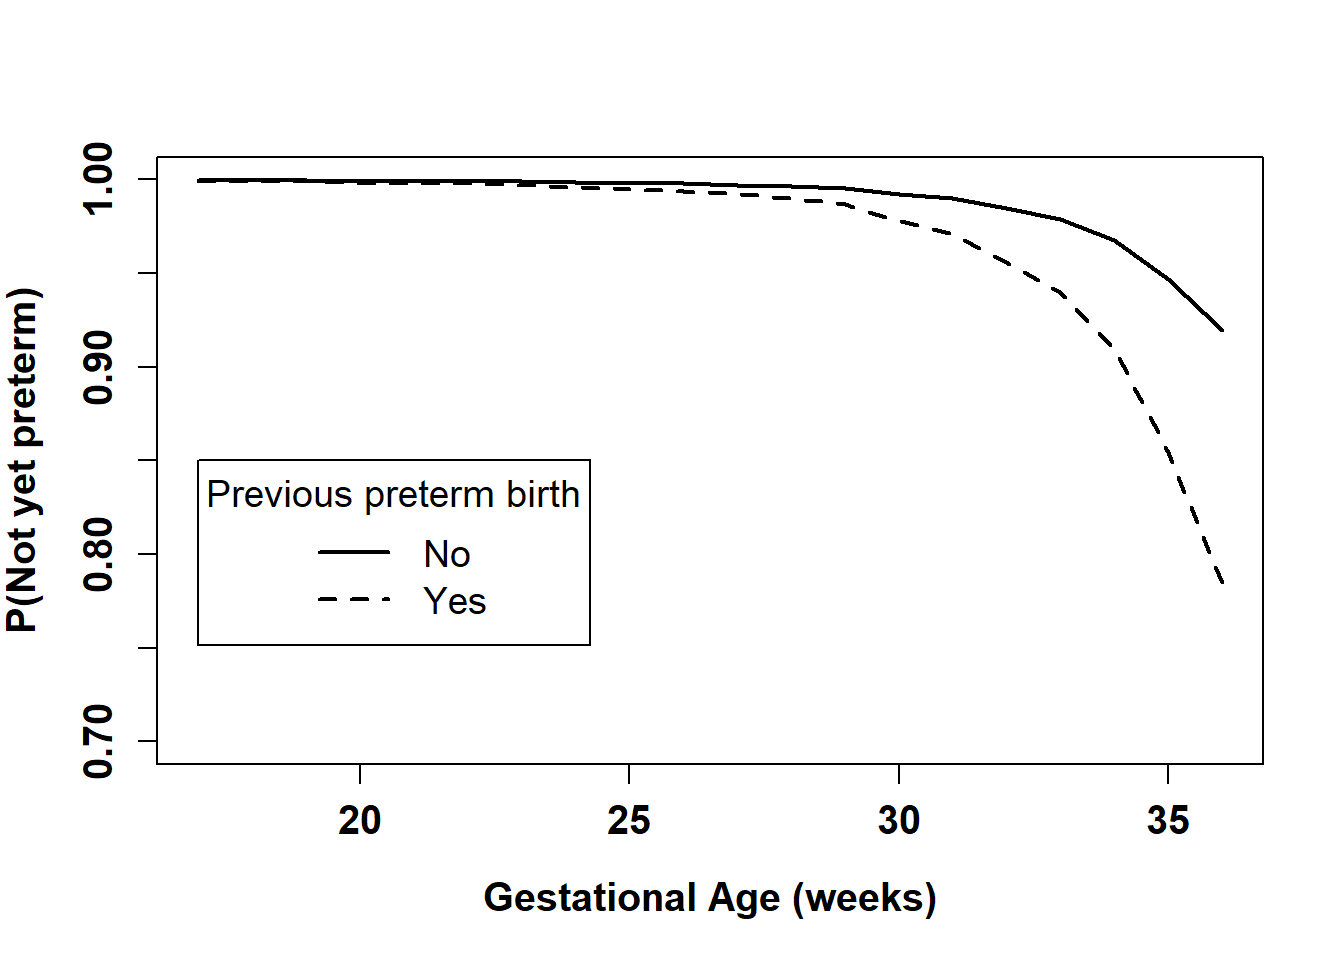 Estimated survival function by previous preterm birth